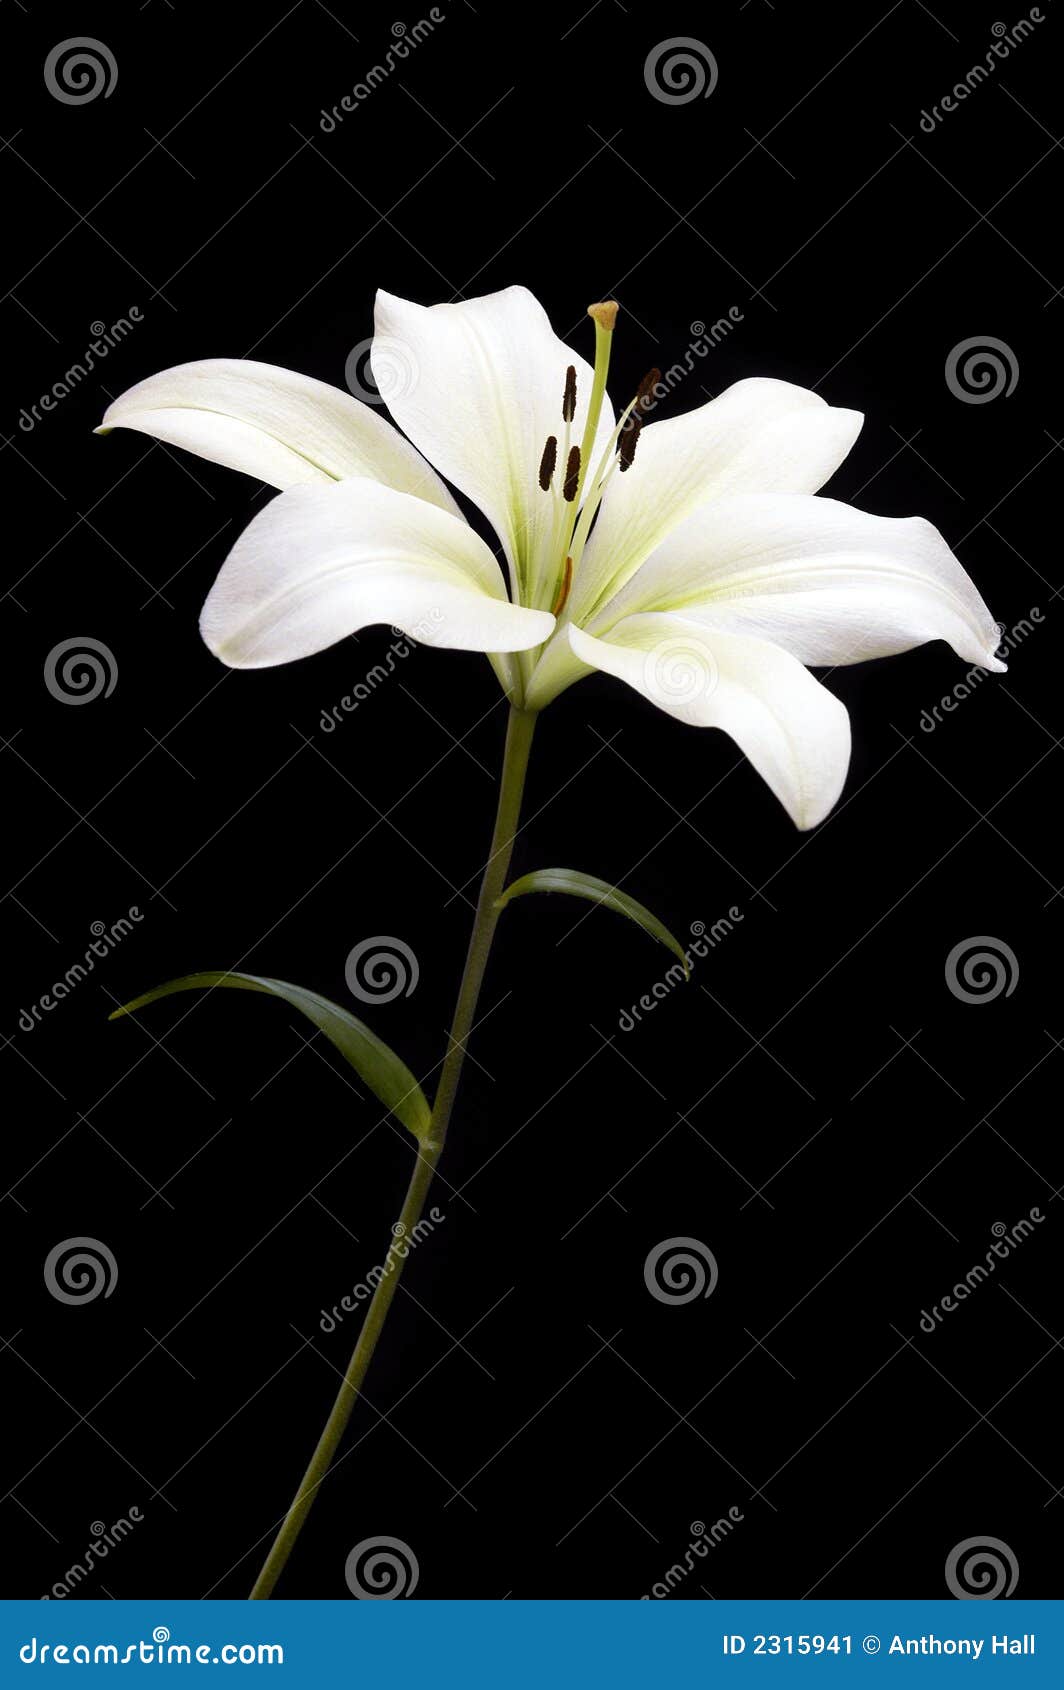 white lily on black